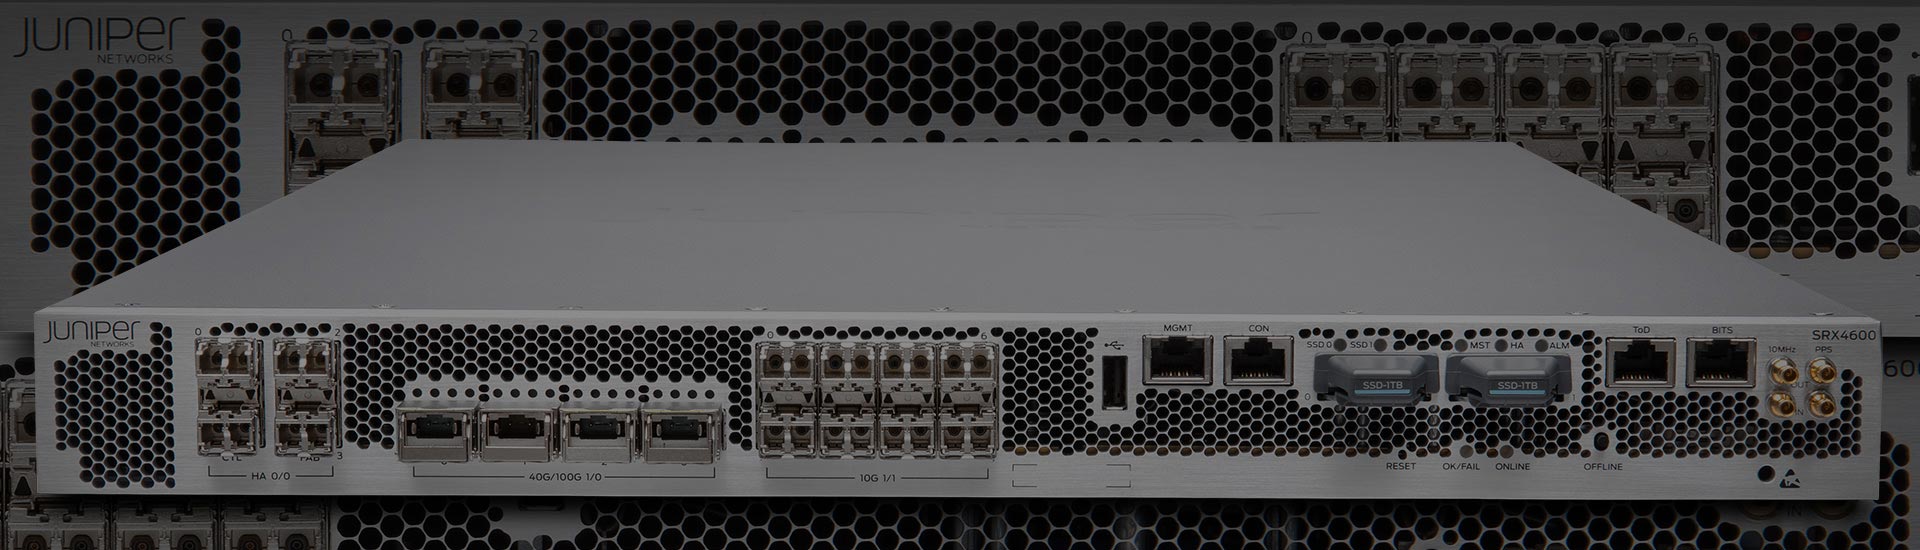 Srx4600 Cloud Service Provider Firewall Juniper Networks